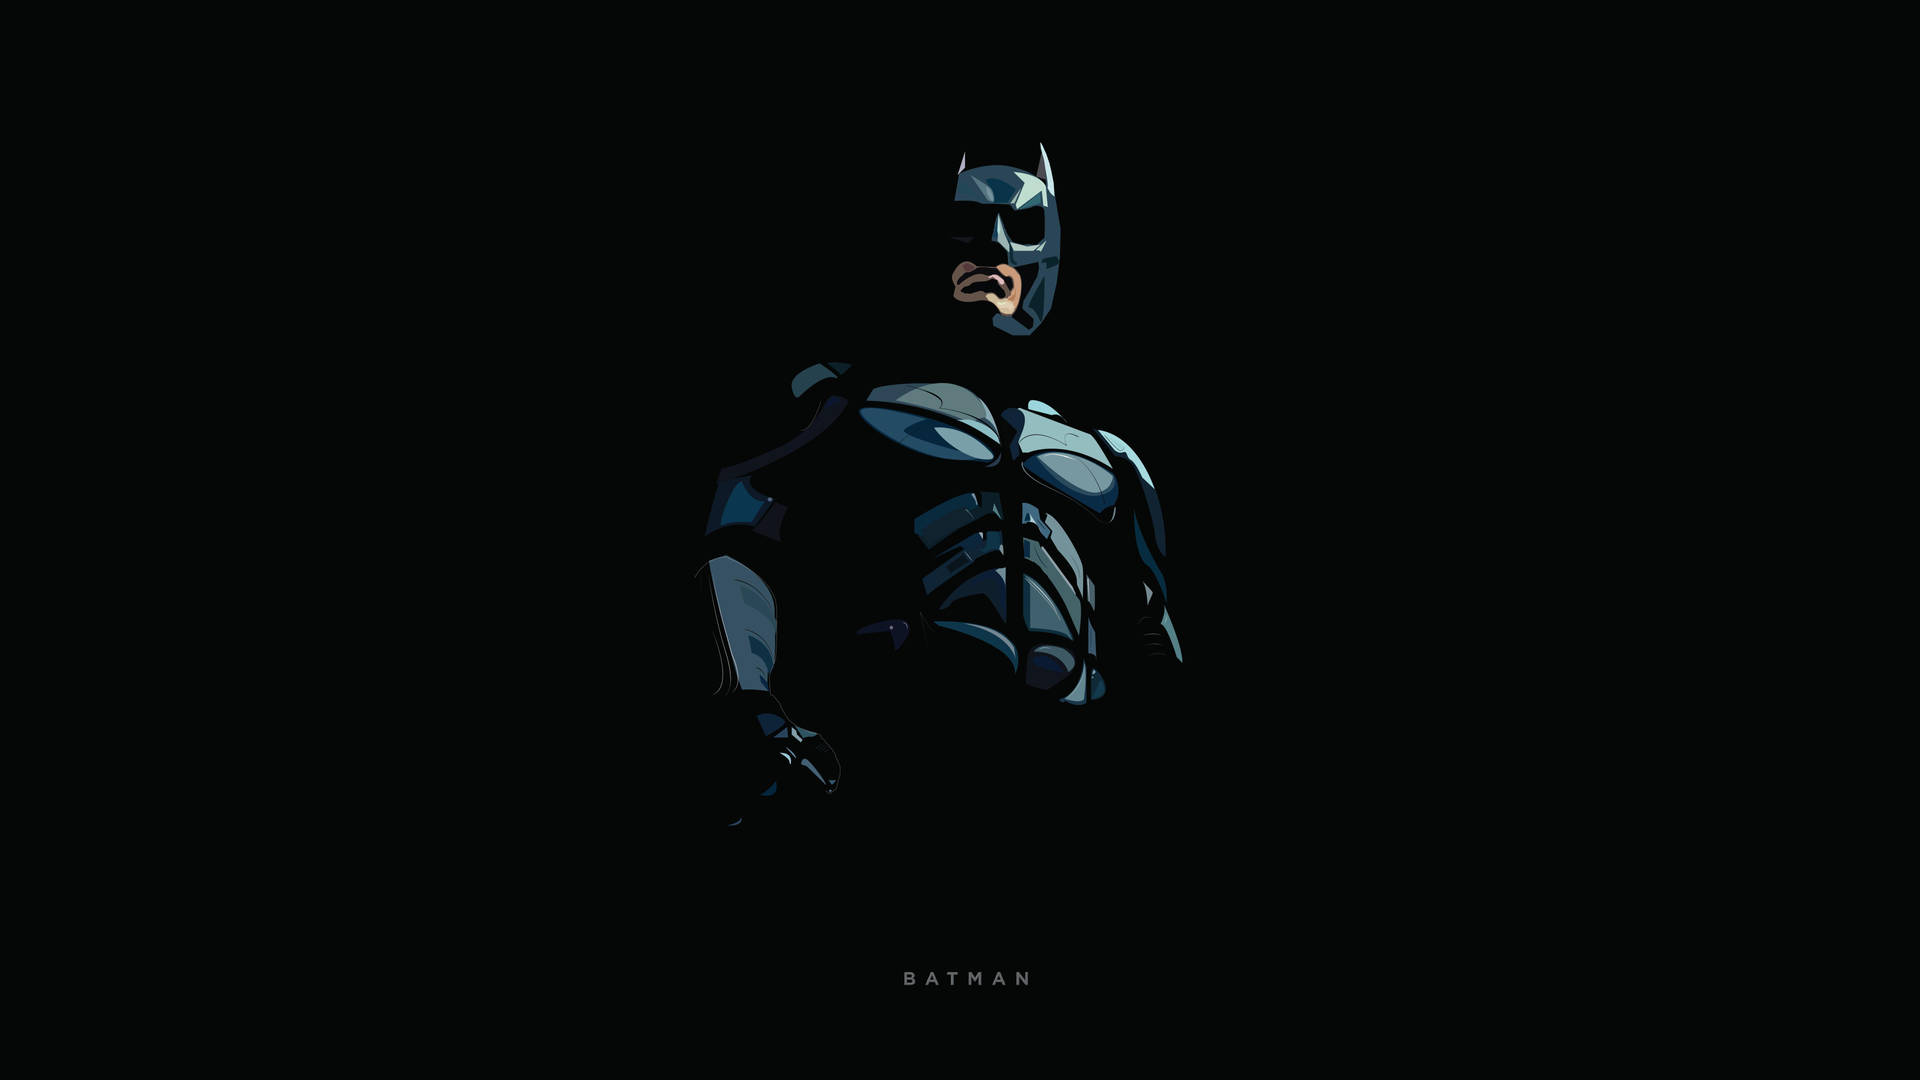 Batman Artistic Digital Portrait 4k Background